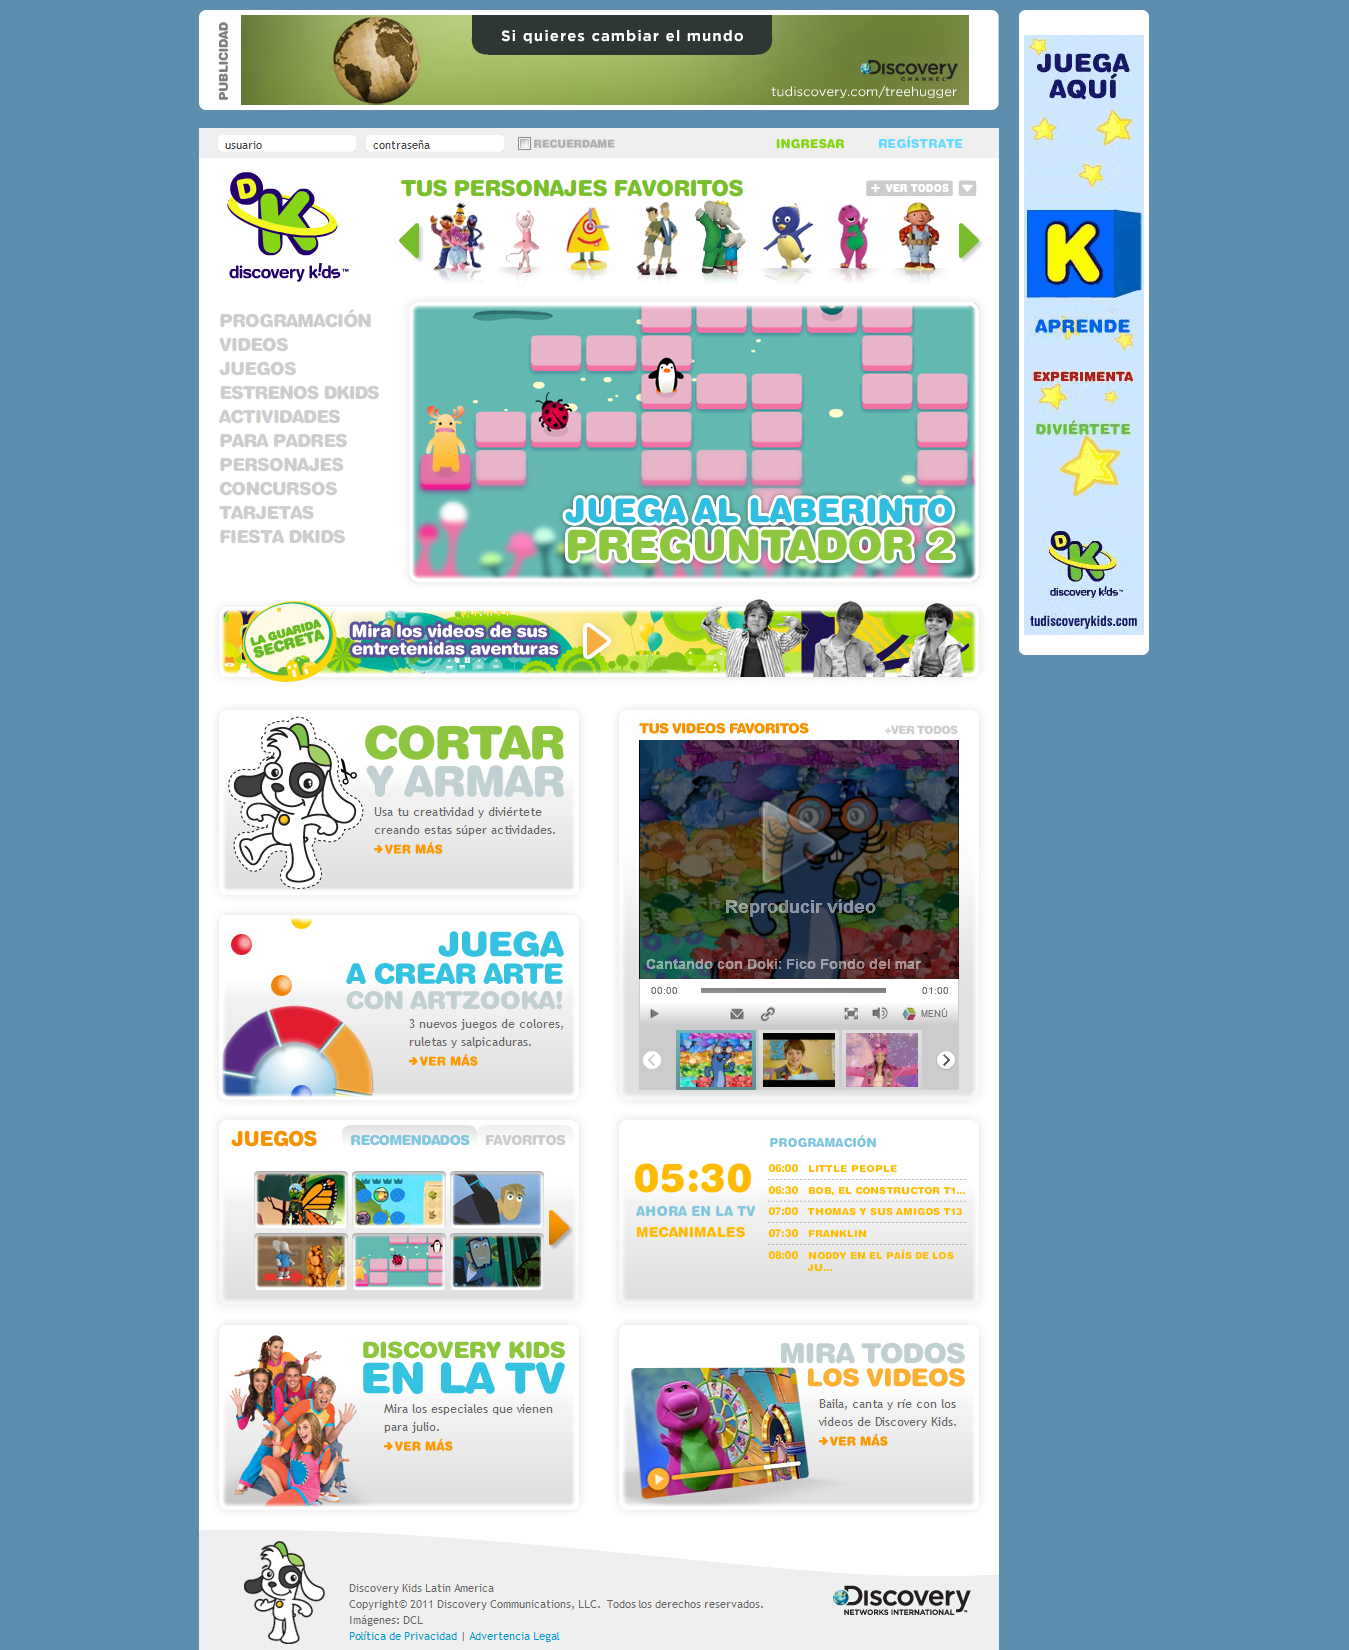 Tu Discovery Kids Juegos Sitio Web Www Tudiscoverykids Com Juegos En Www Tudiscoverykids Com Tecnoautos Com